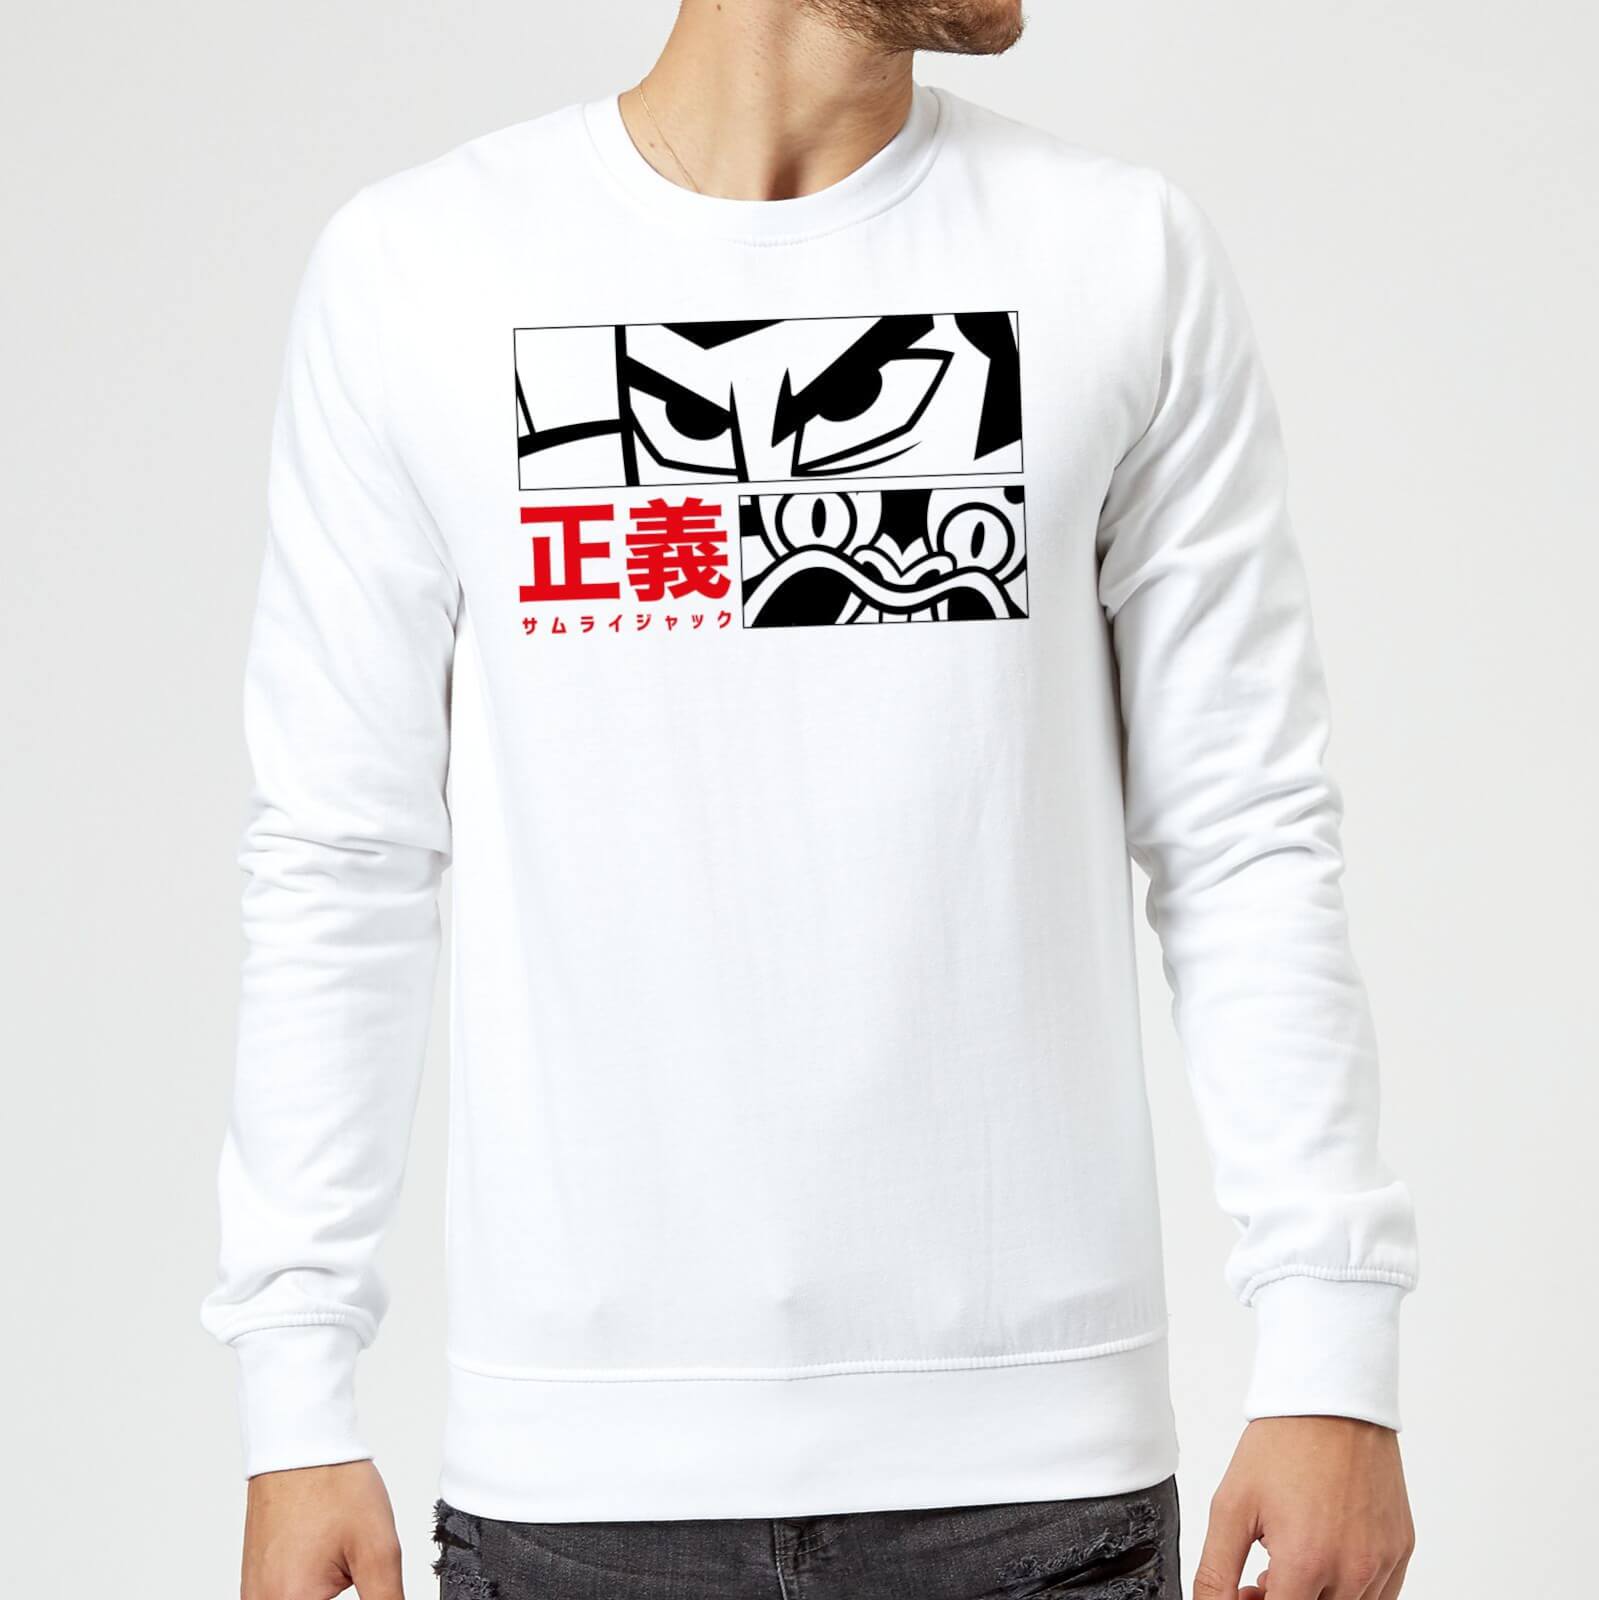 Samurai Jack Arch Nemesis Sweatshirt - White - S - White